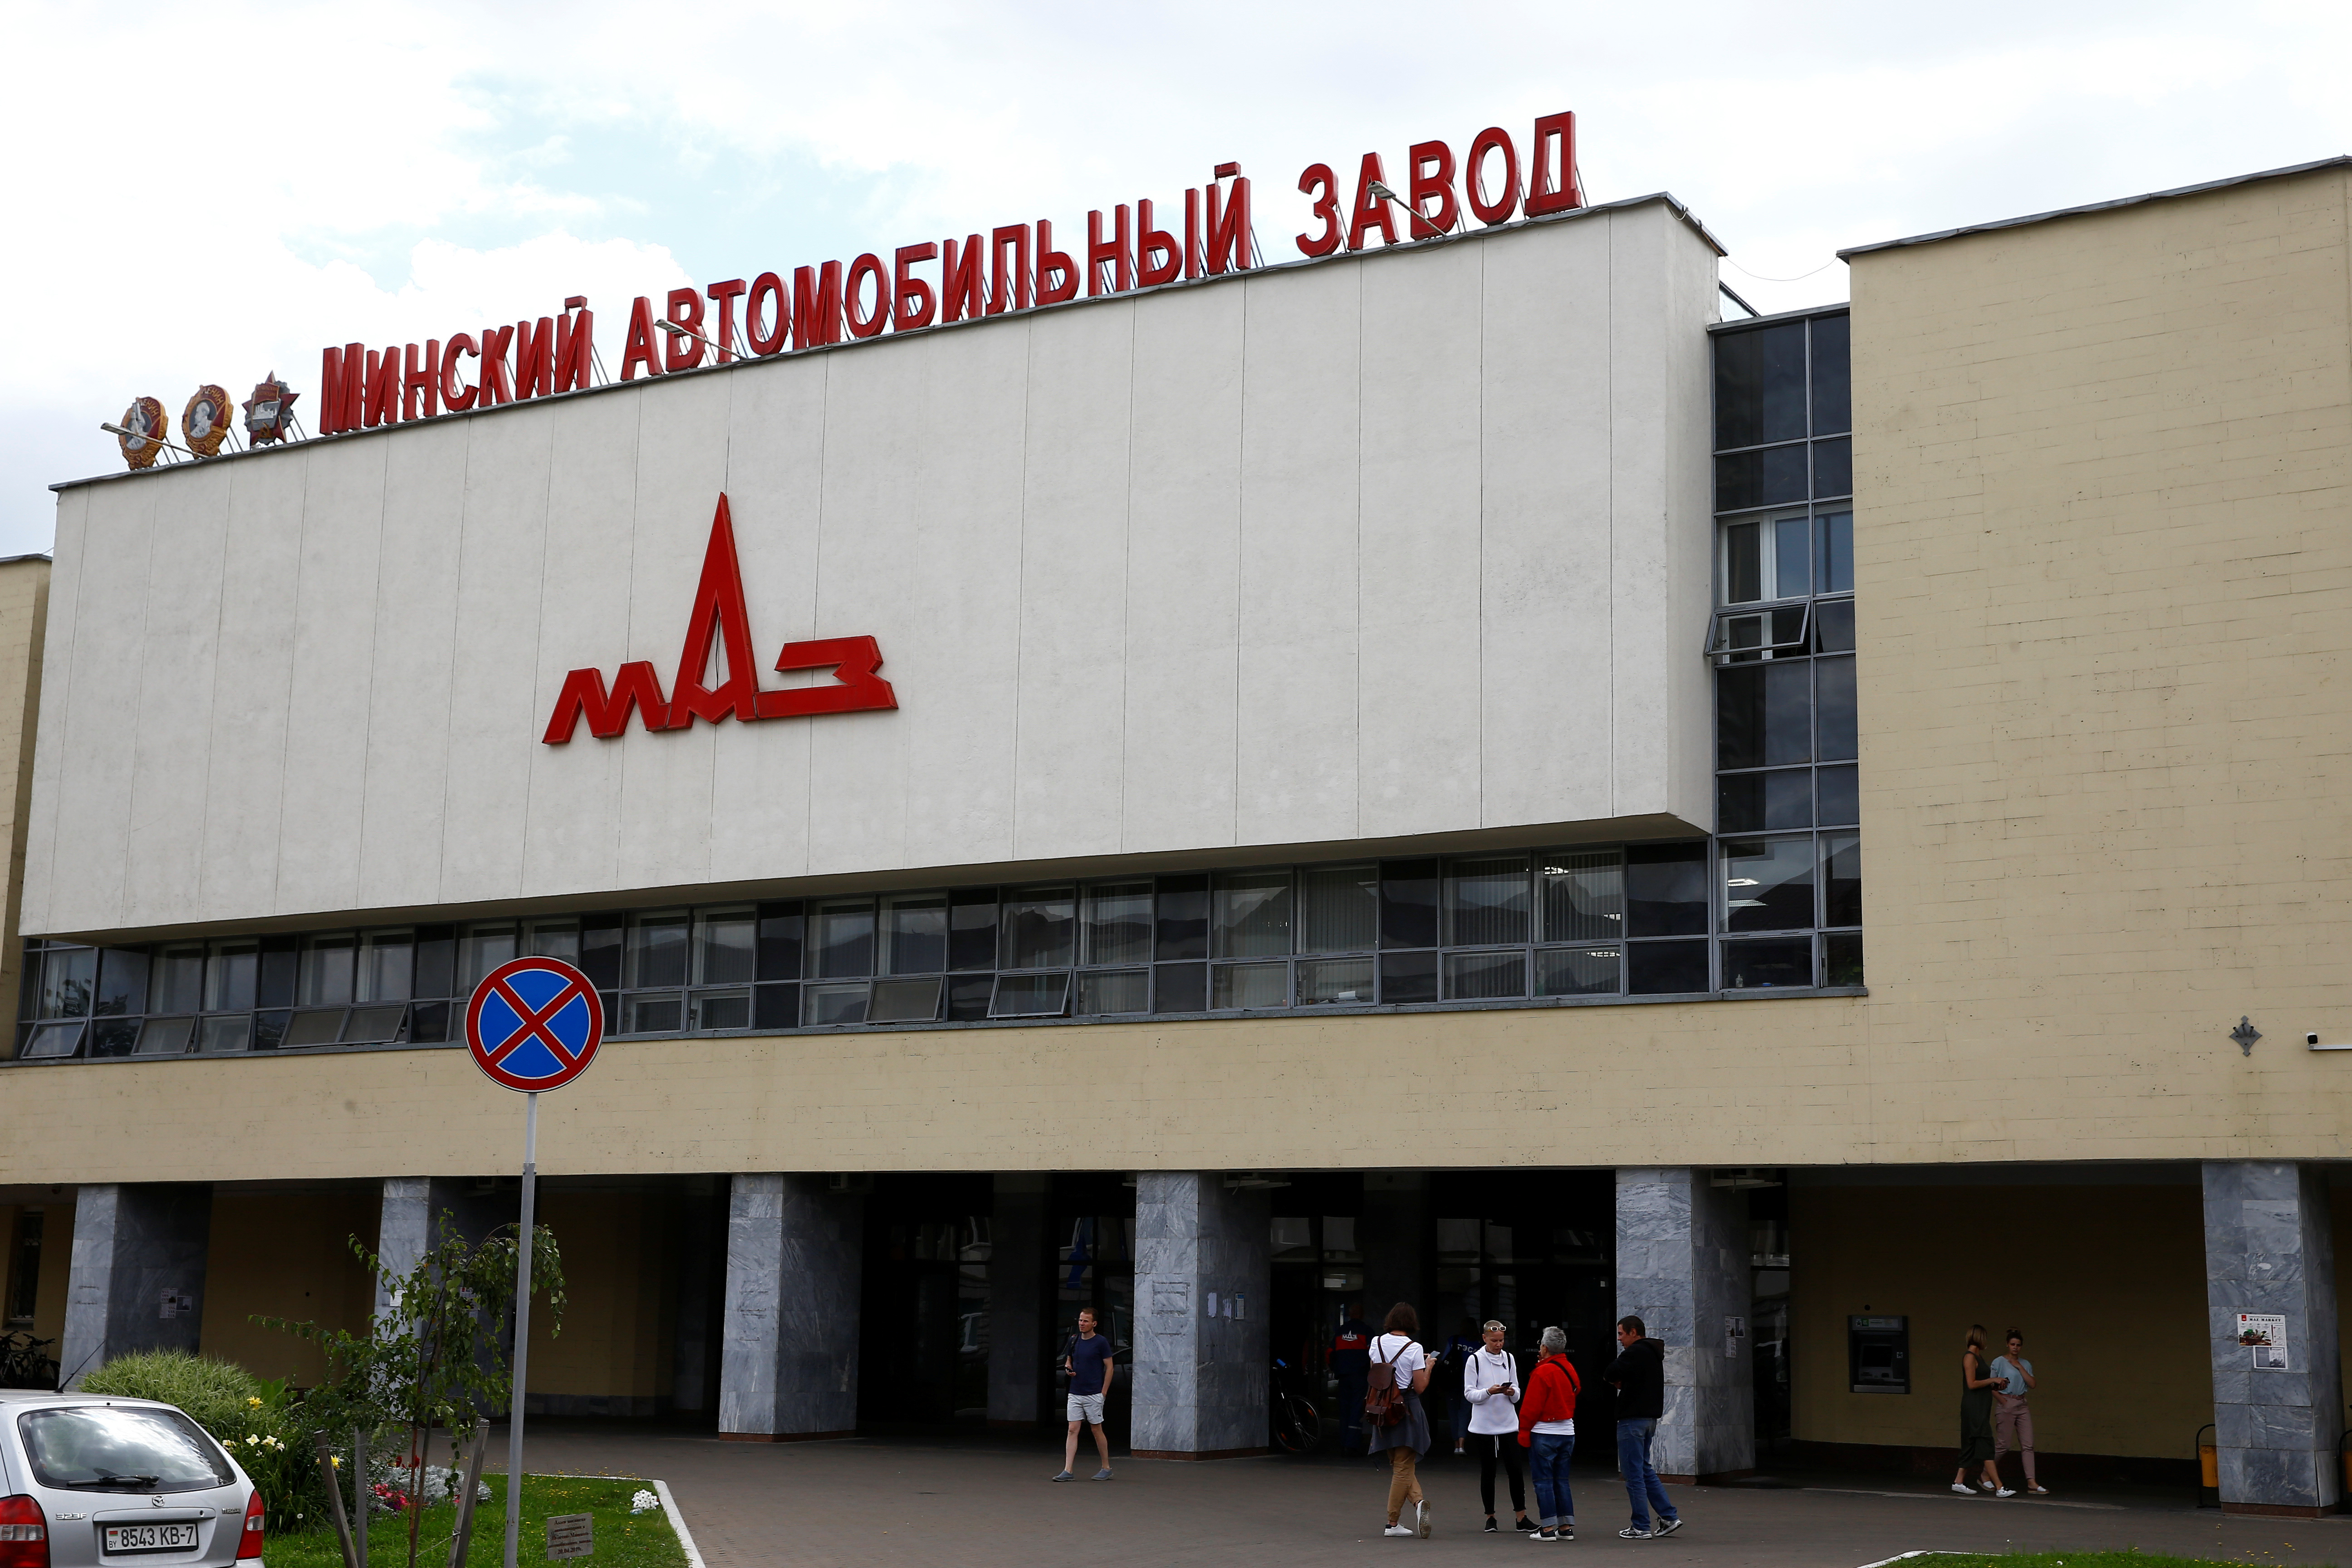 An exterior view shows Minsk Automobile Plant (MAZ) in Minsk